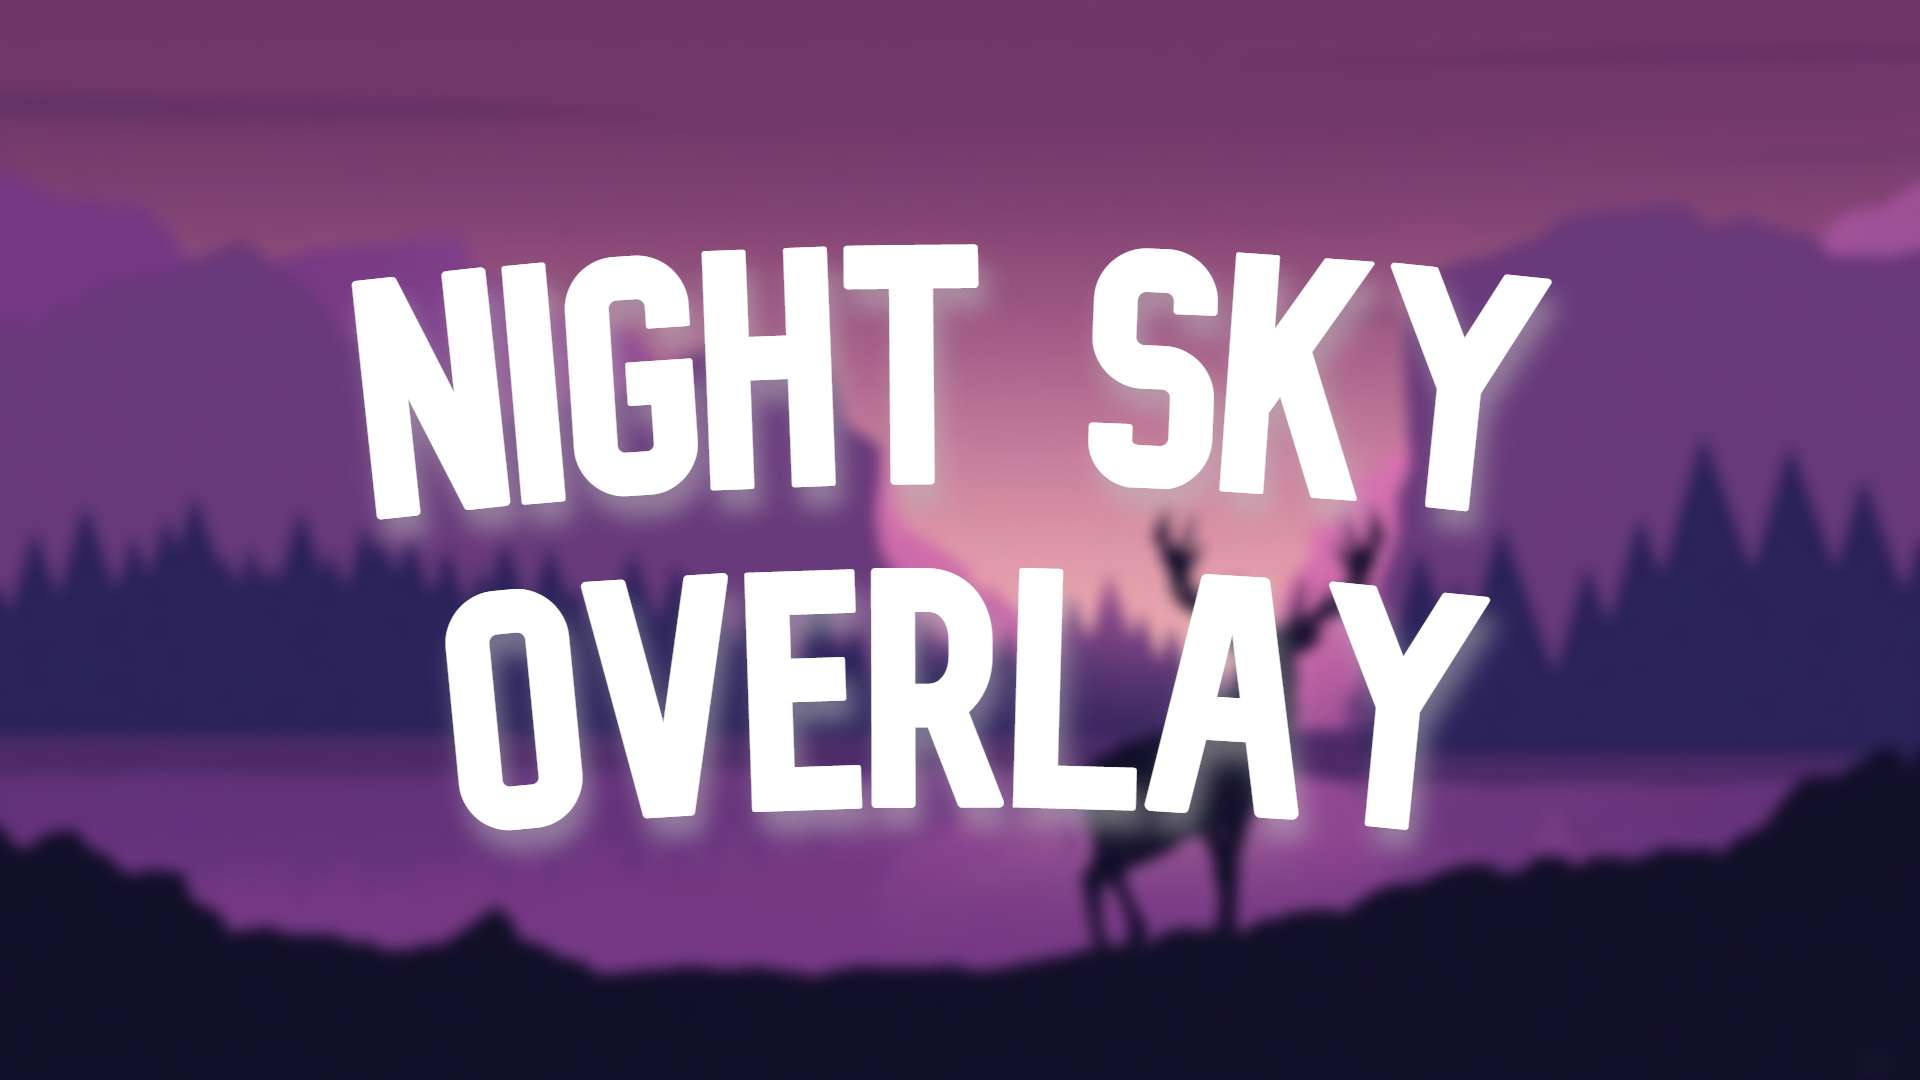 Night Sky Overlay #14 16x by rh56 on PvPRP